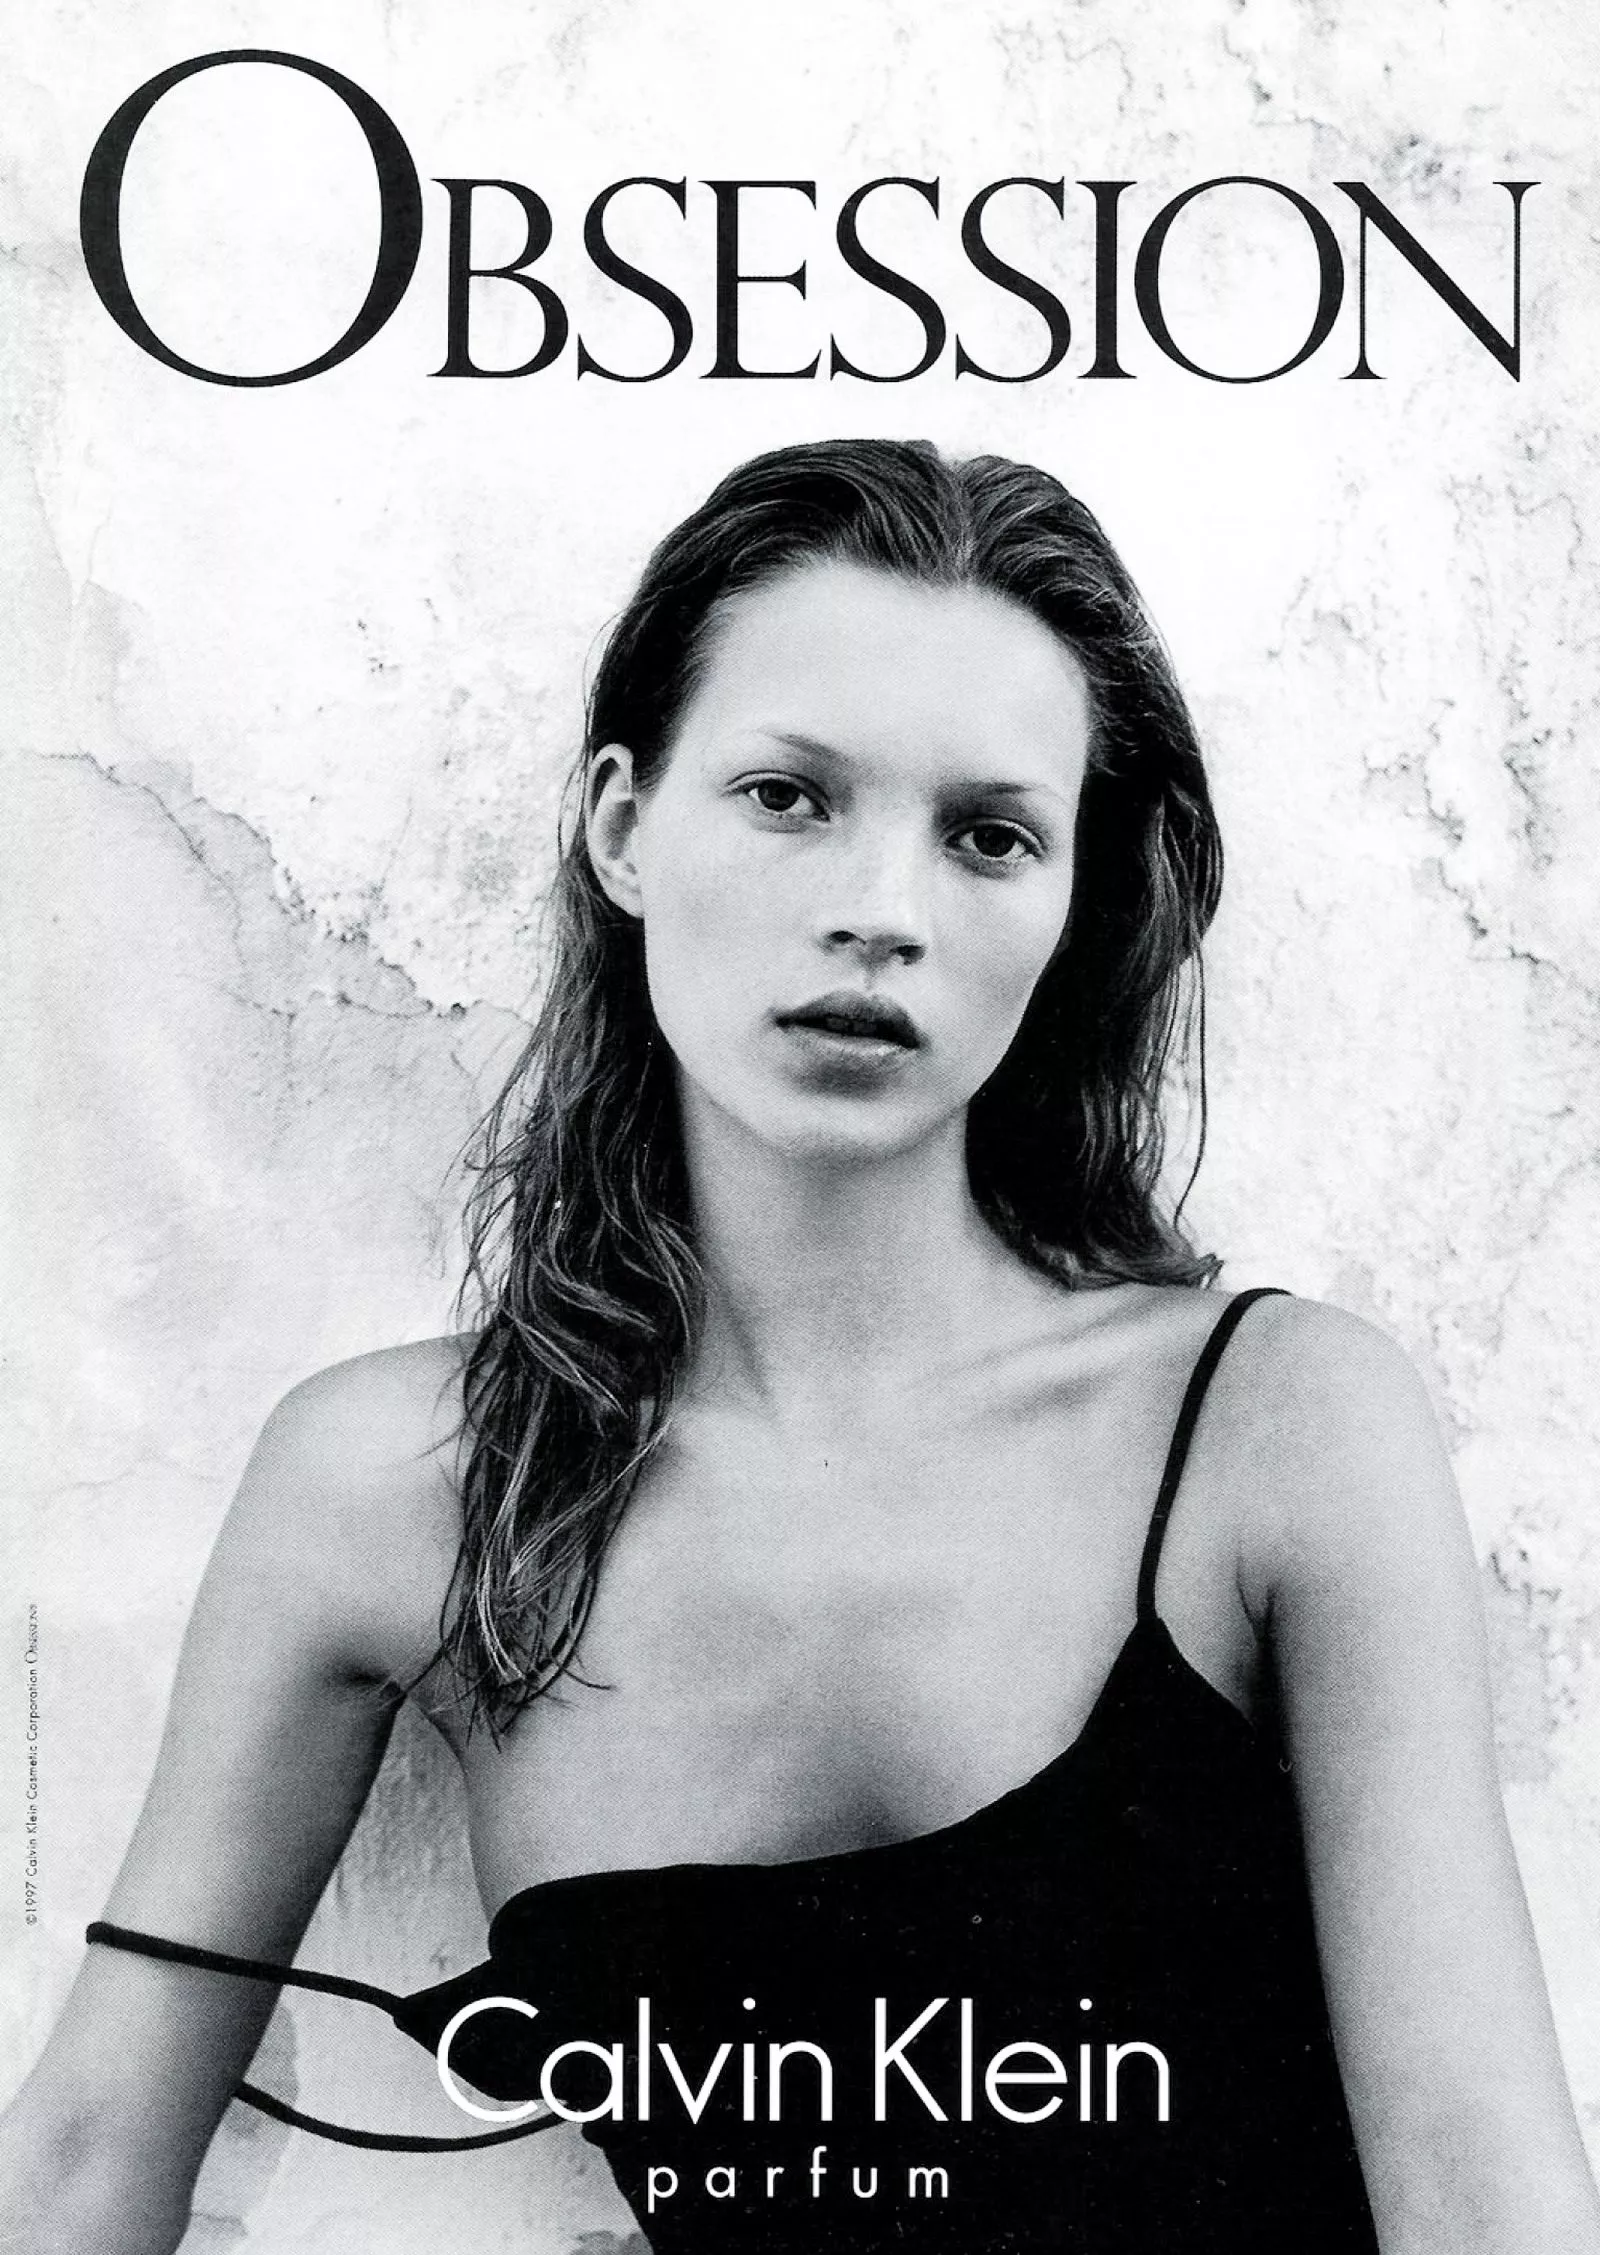 Кейт Мосс в рекламной кампании Calvin Klein Obsession, 1992 г.